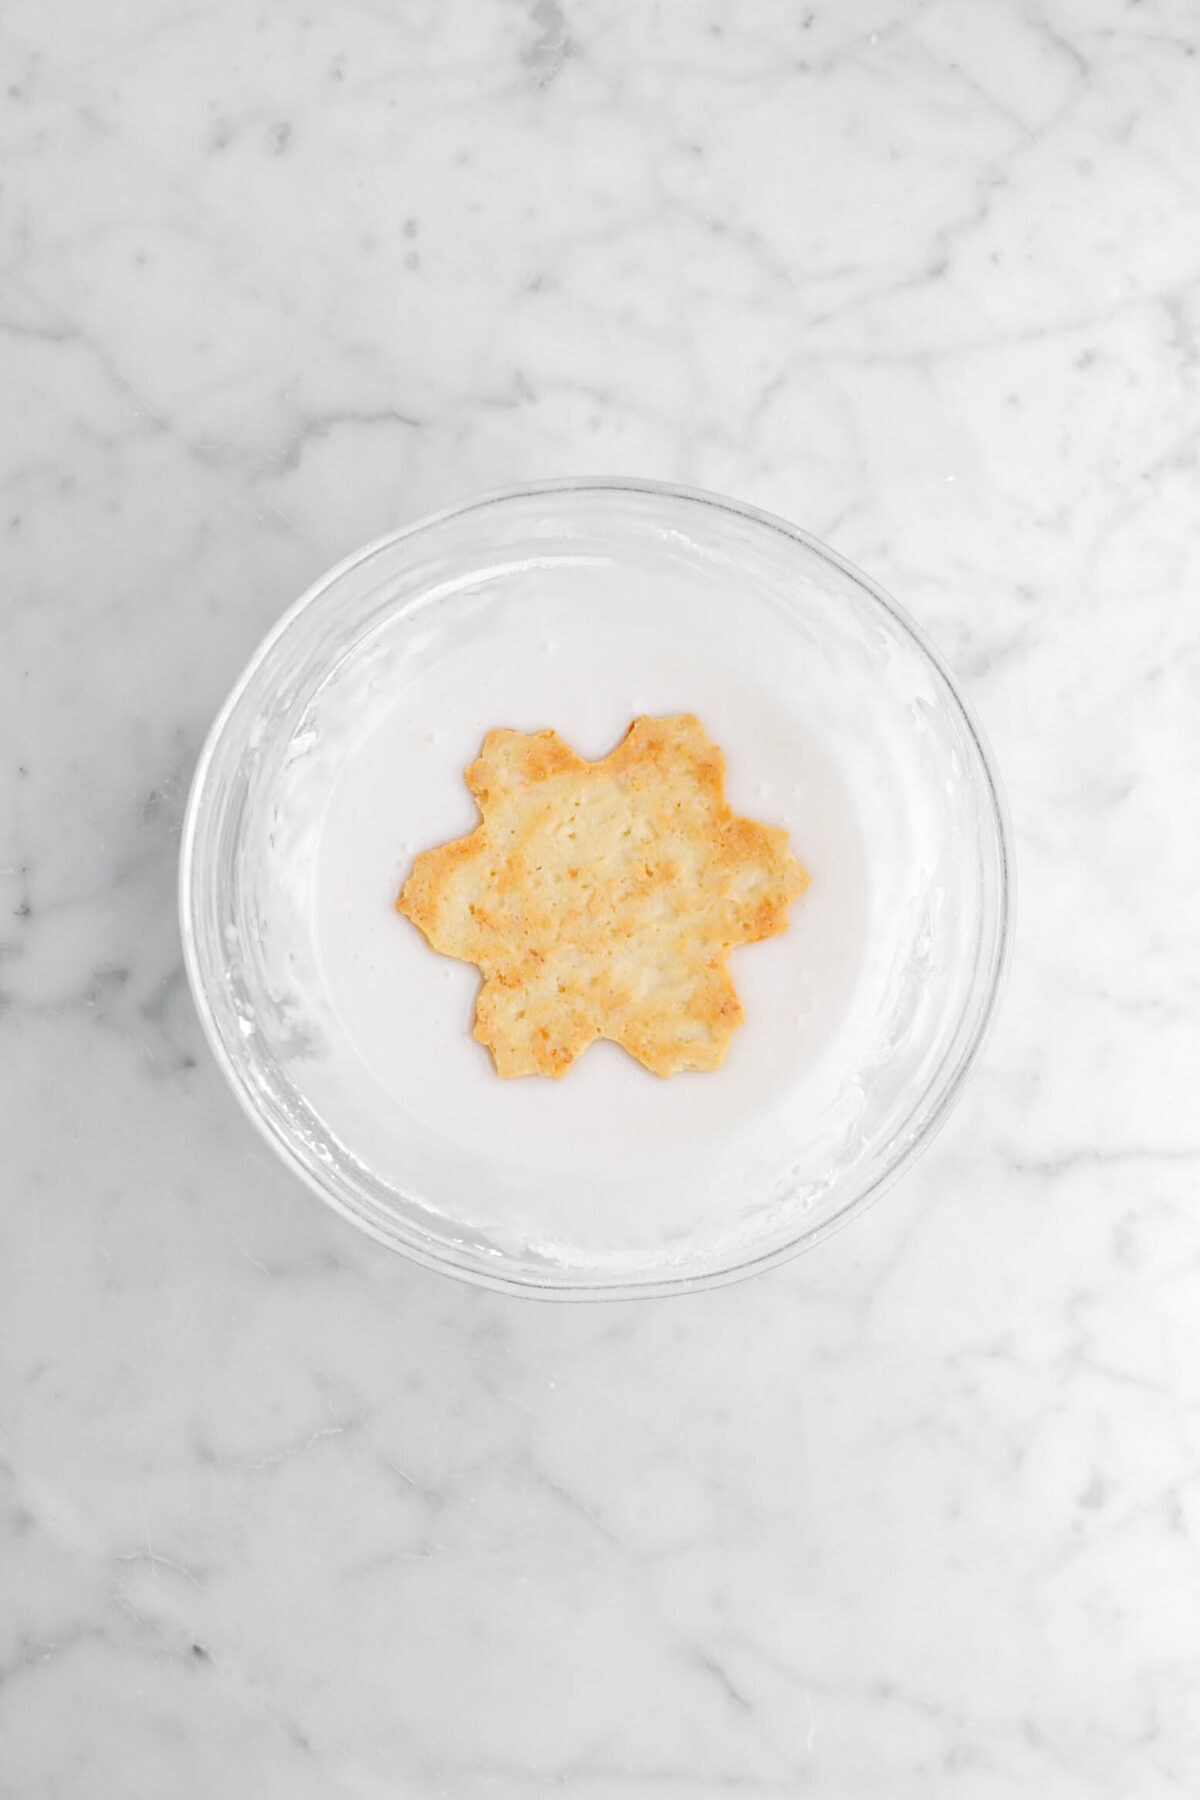 upside down snowflake cookie in icing.